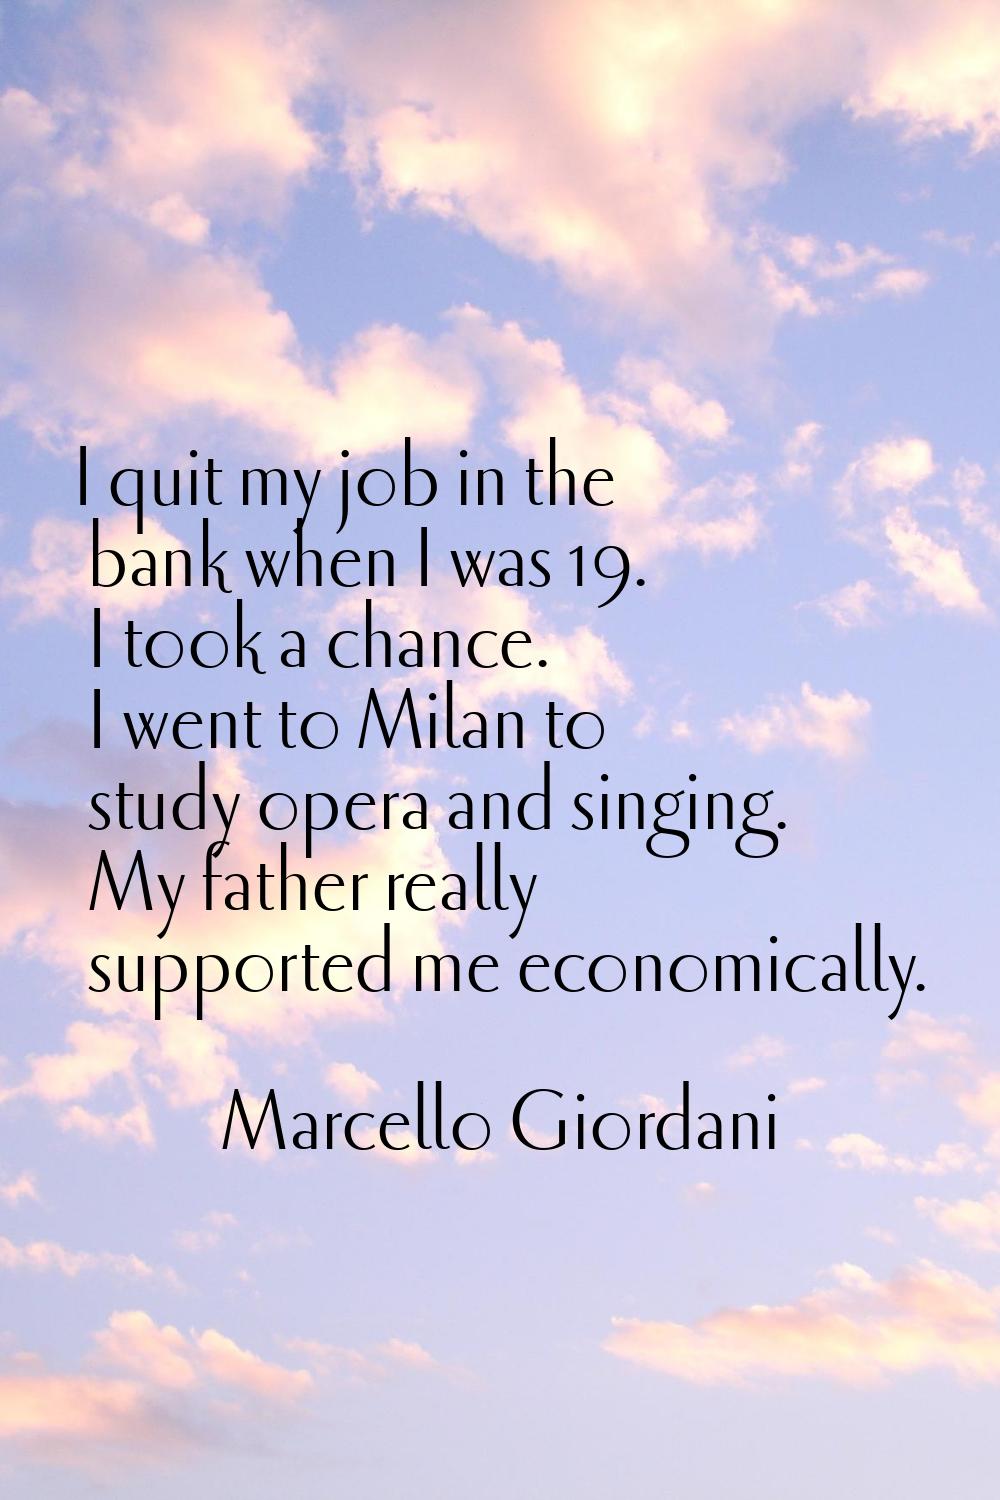 I quit my job in the bank when I was 19. I took a chance. I went to Milan to study opera and singin